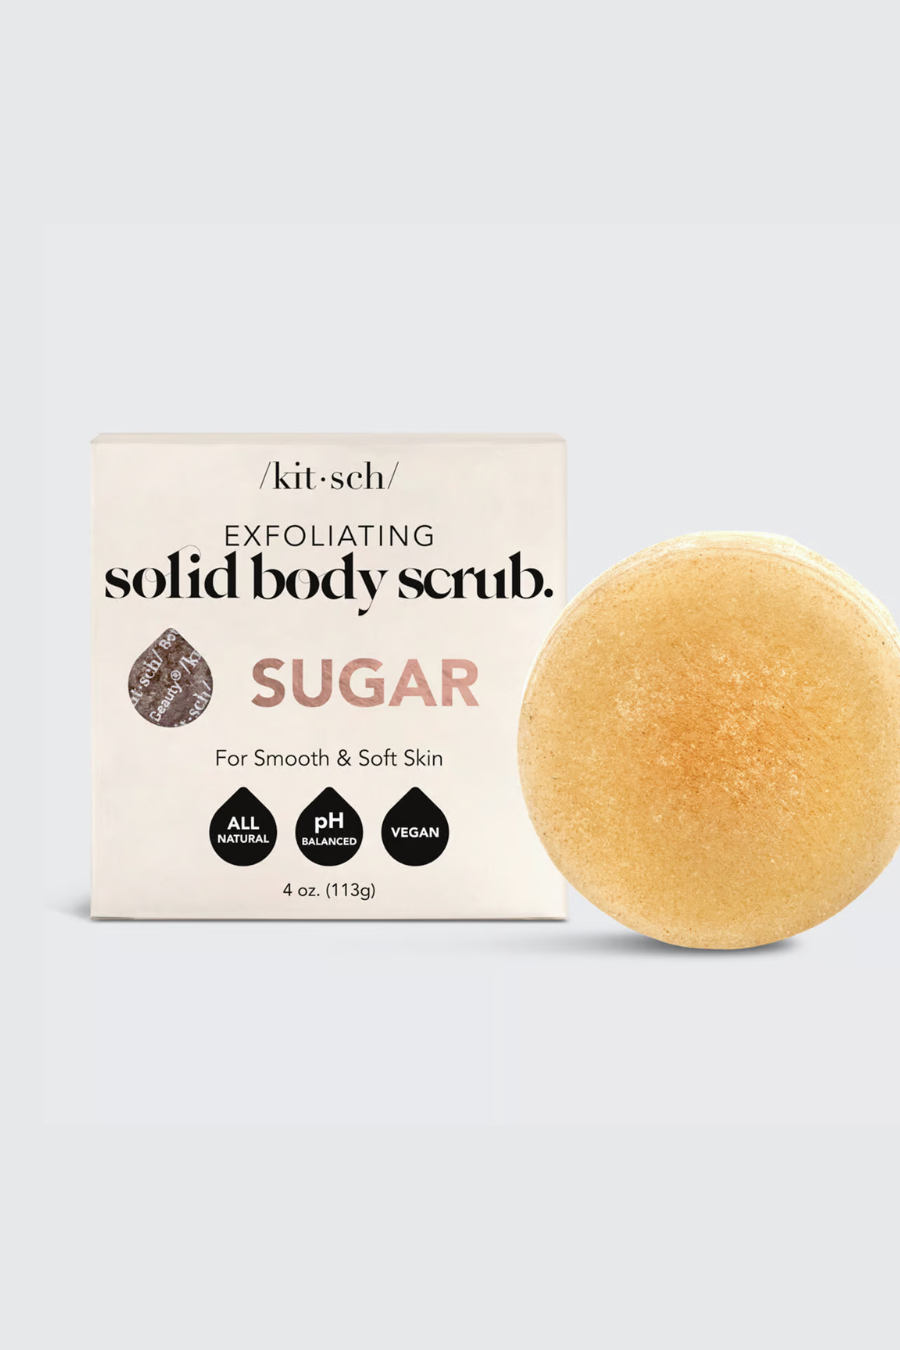 sugar scrub bar sitting next to its packaging 